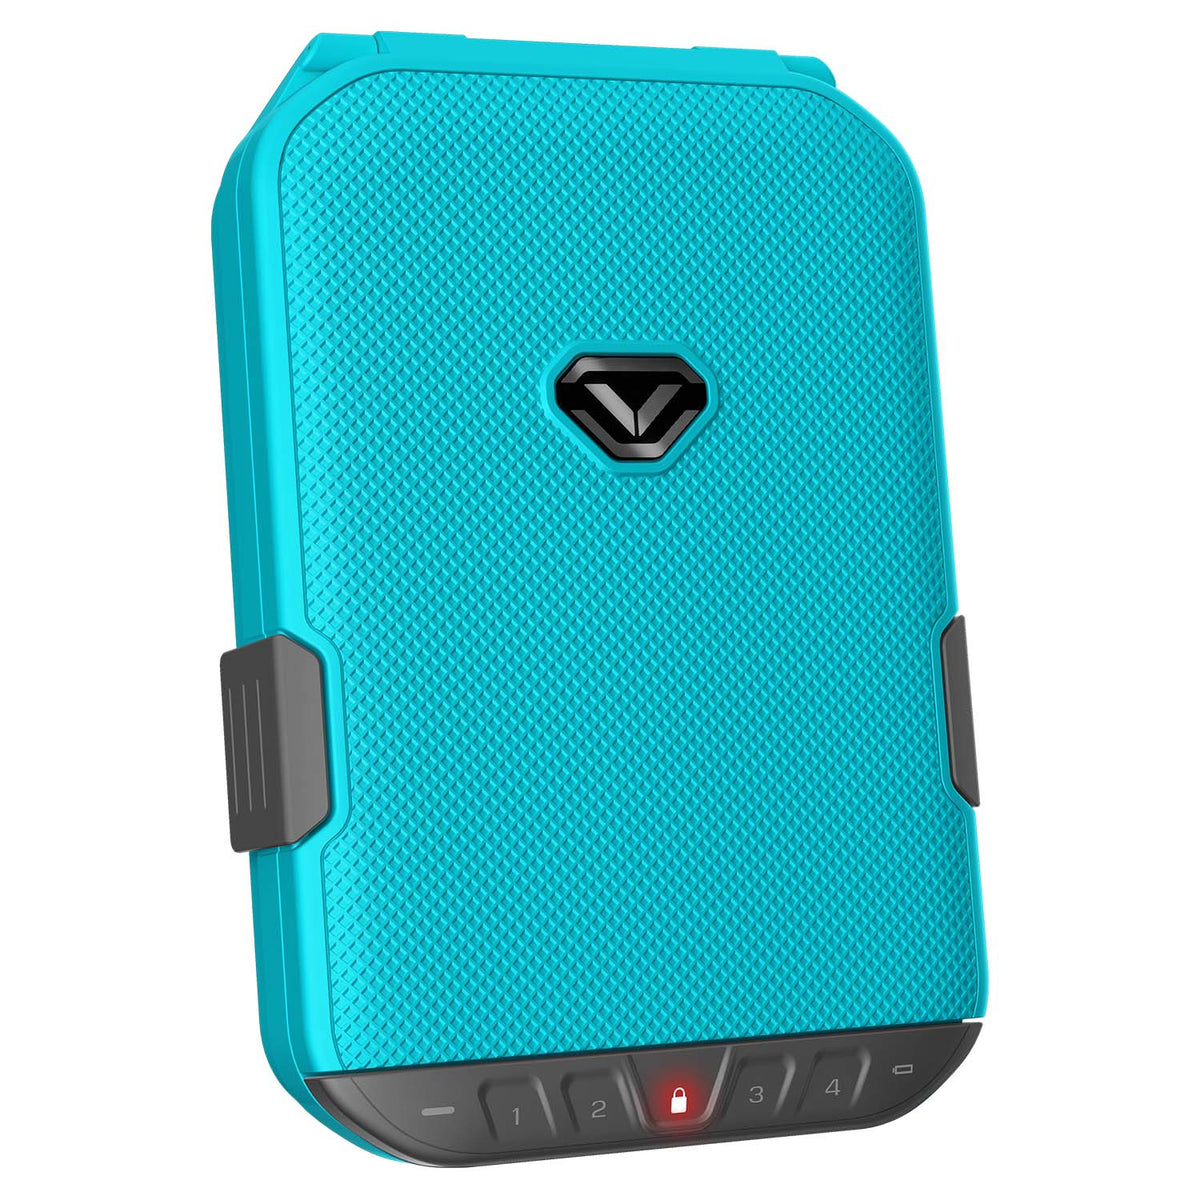 Vaultek - lifepod 1.0 - luxe blue - MODLOCK